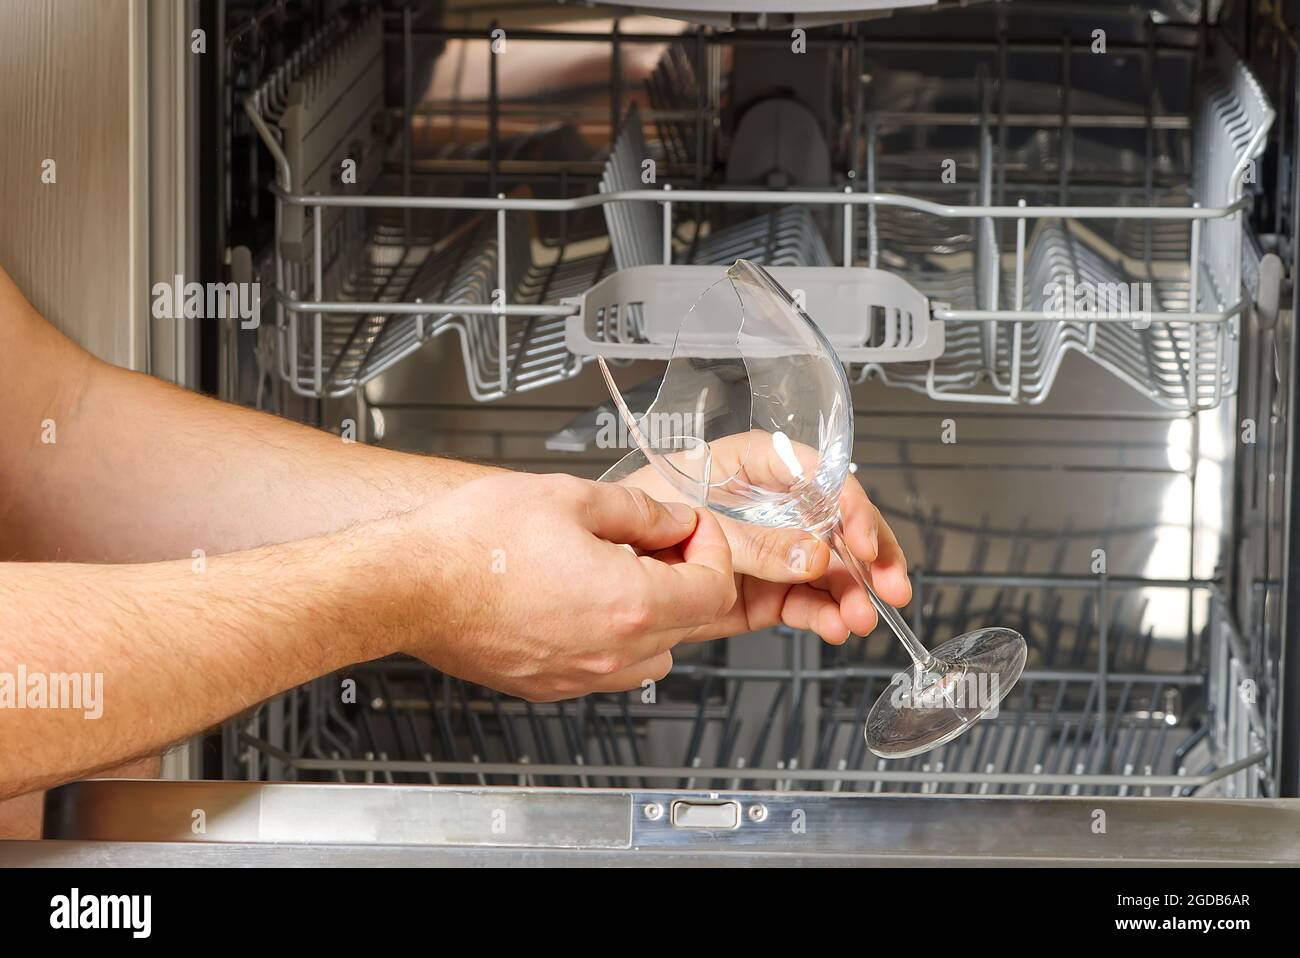 Broken wine glass in dishwasher after washing Stock Photo - Alamy